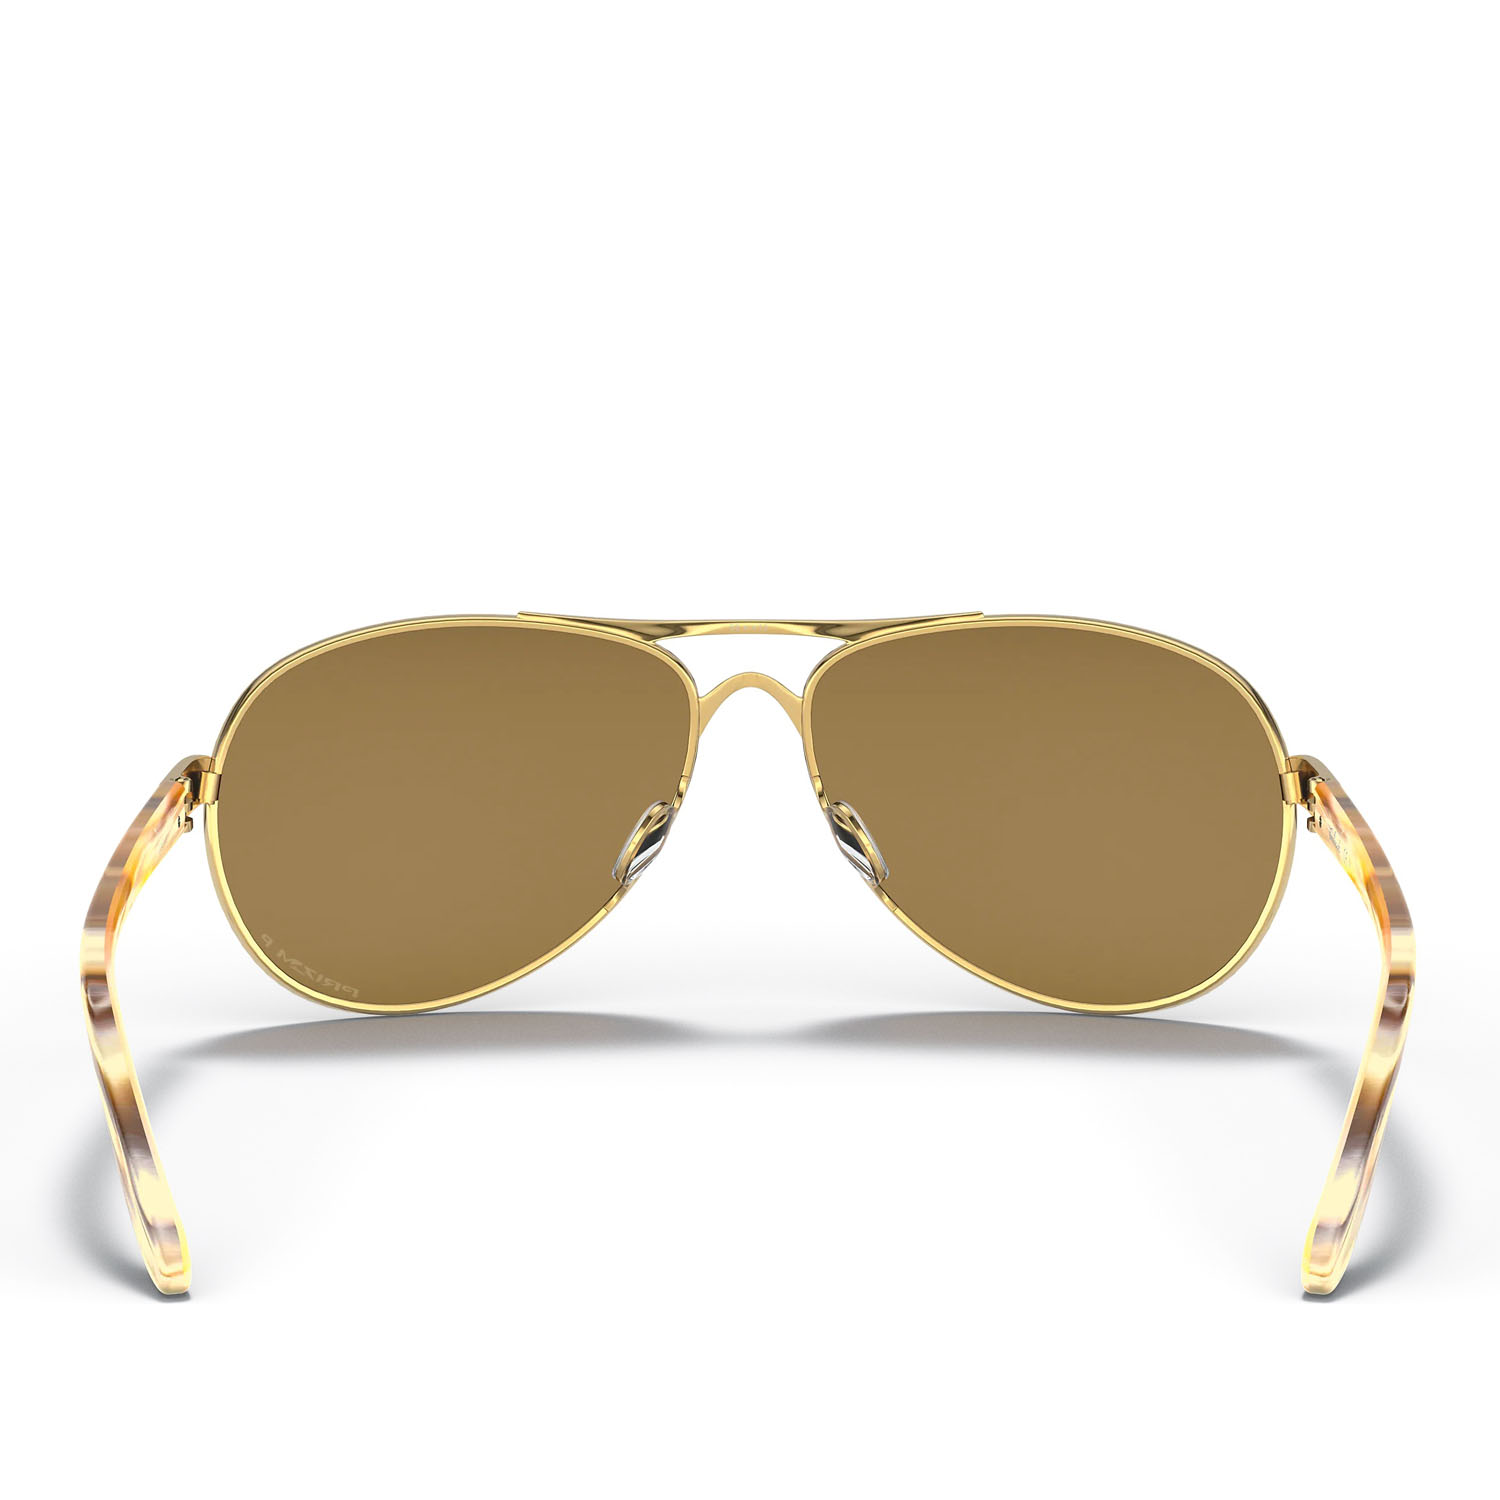 Очки солнцезащитные Oakley Feedback Polished Gold-Prizm Rose Gold Polarized